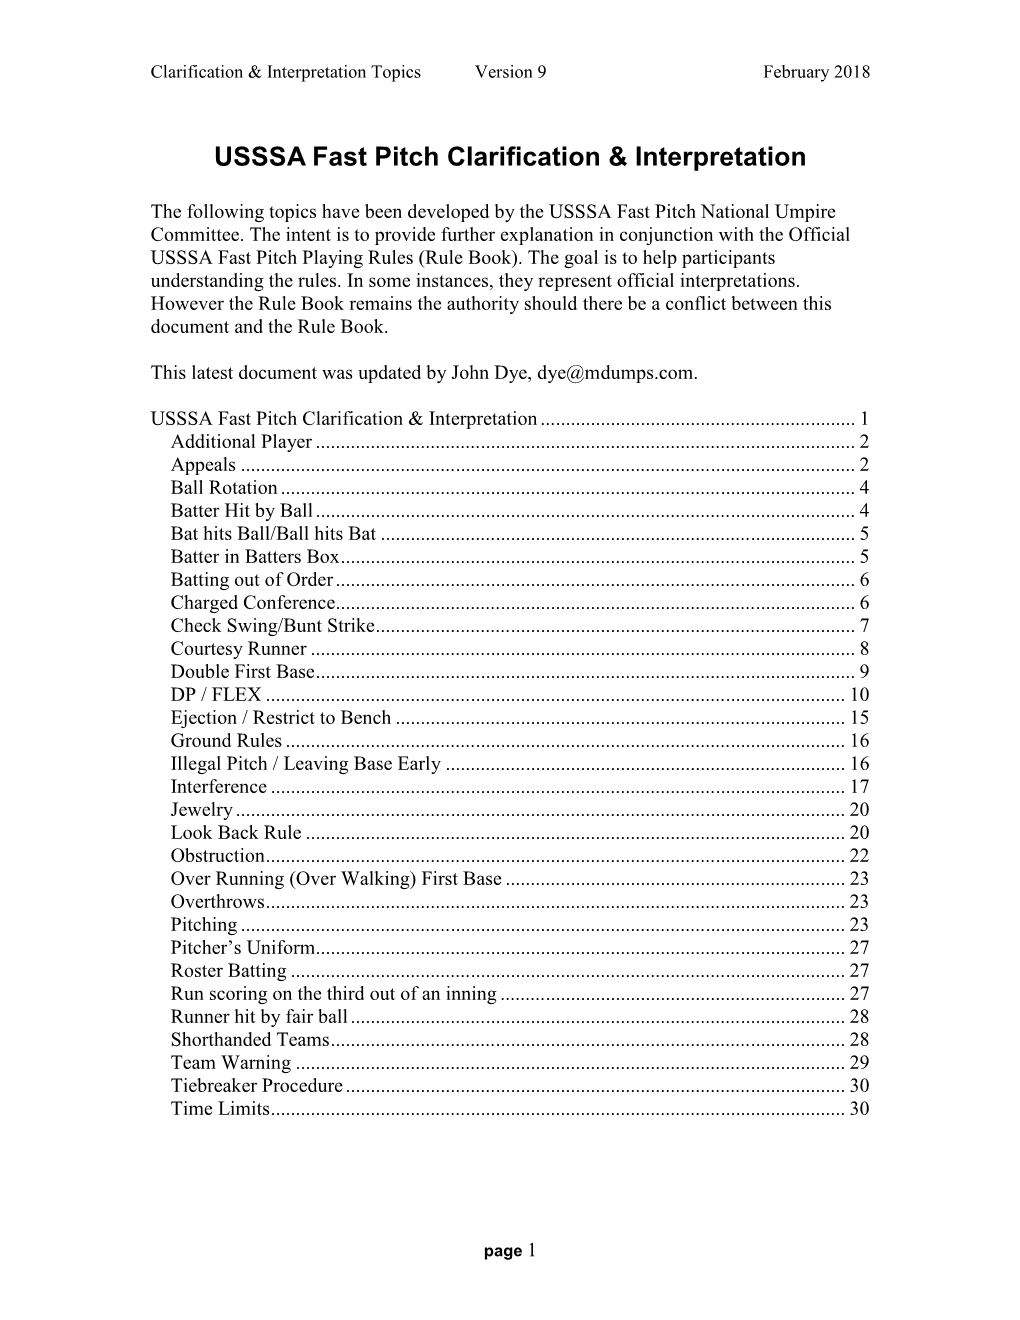 USSSA Fast Pitch Clarification & Interpretation